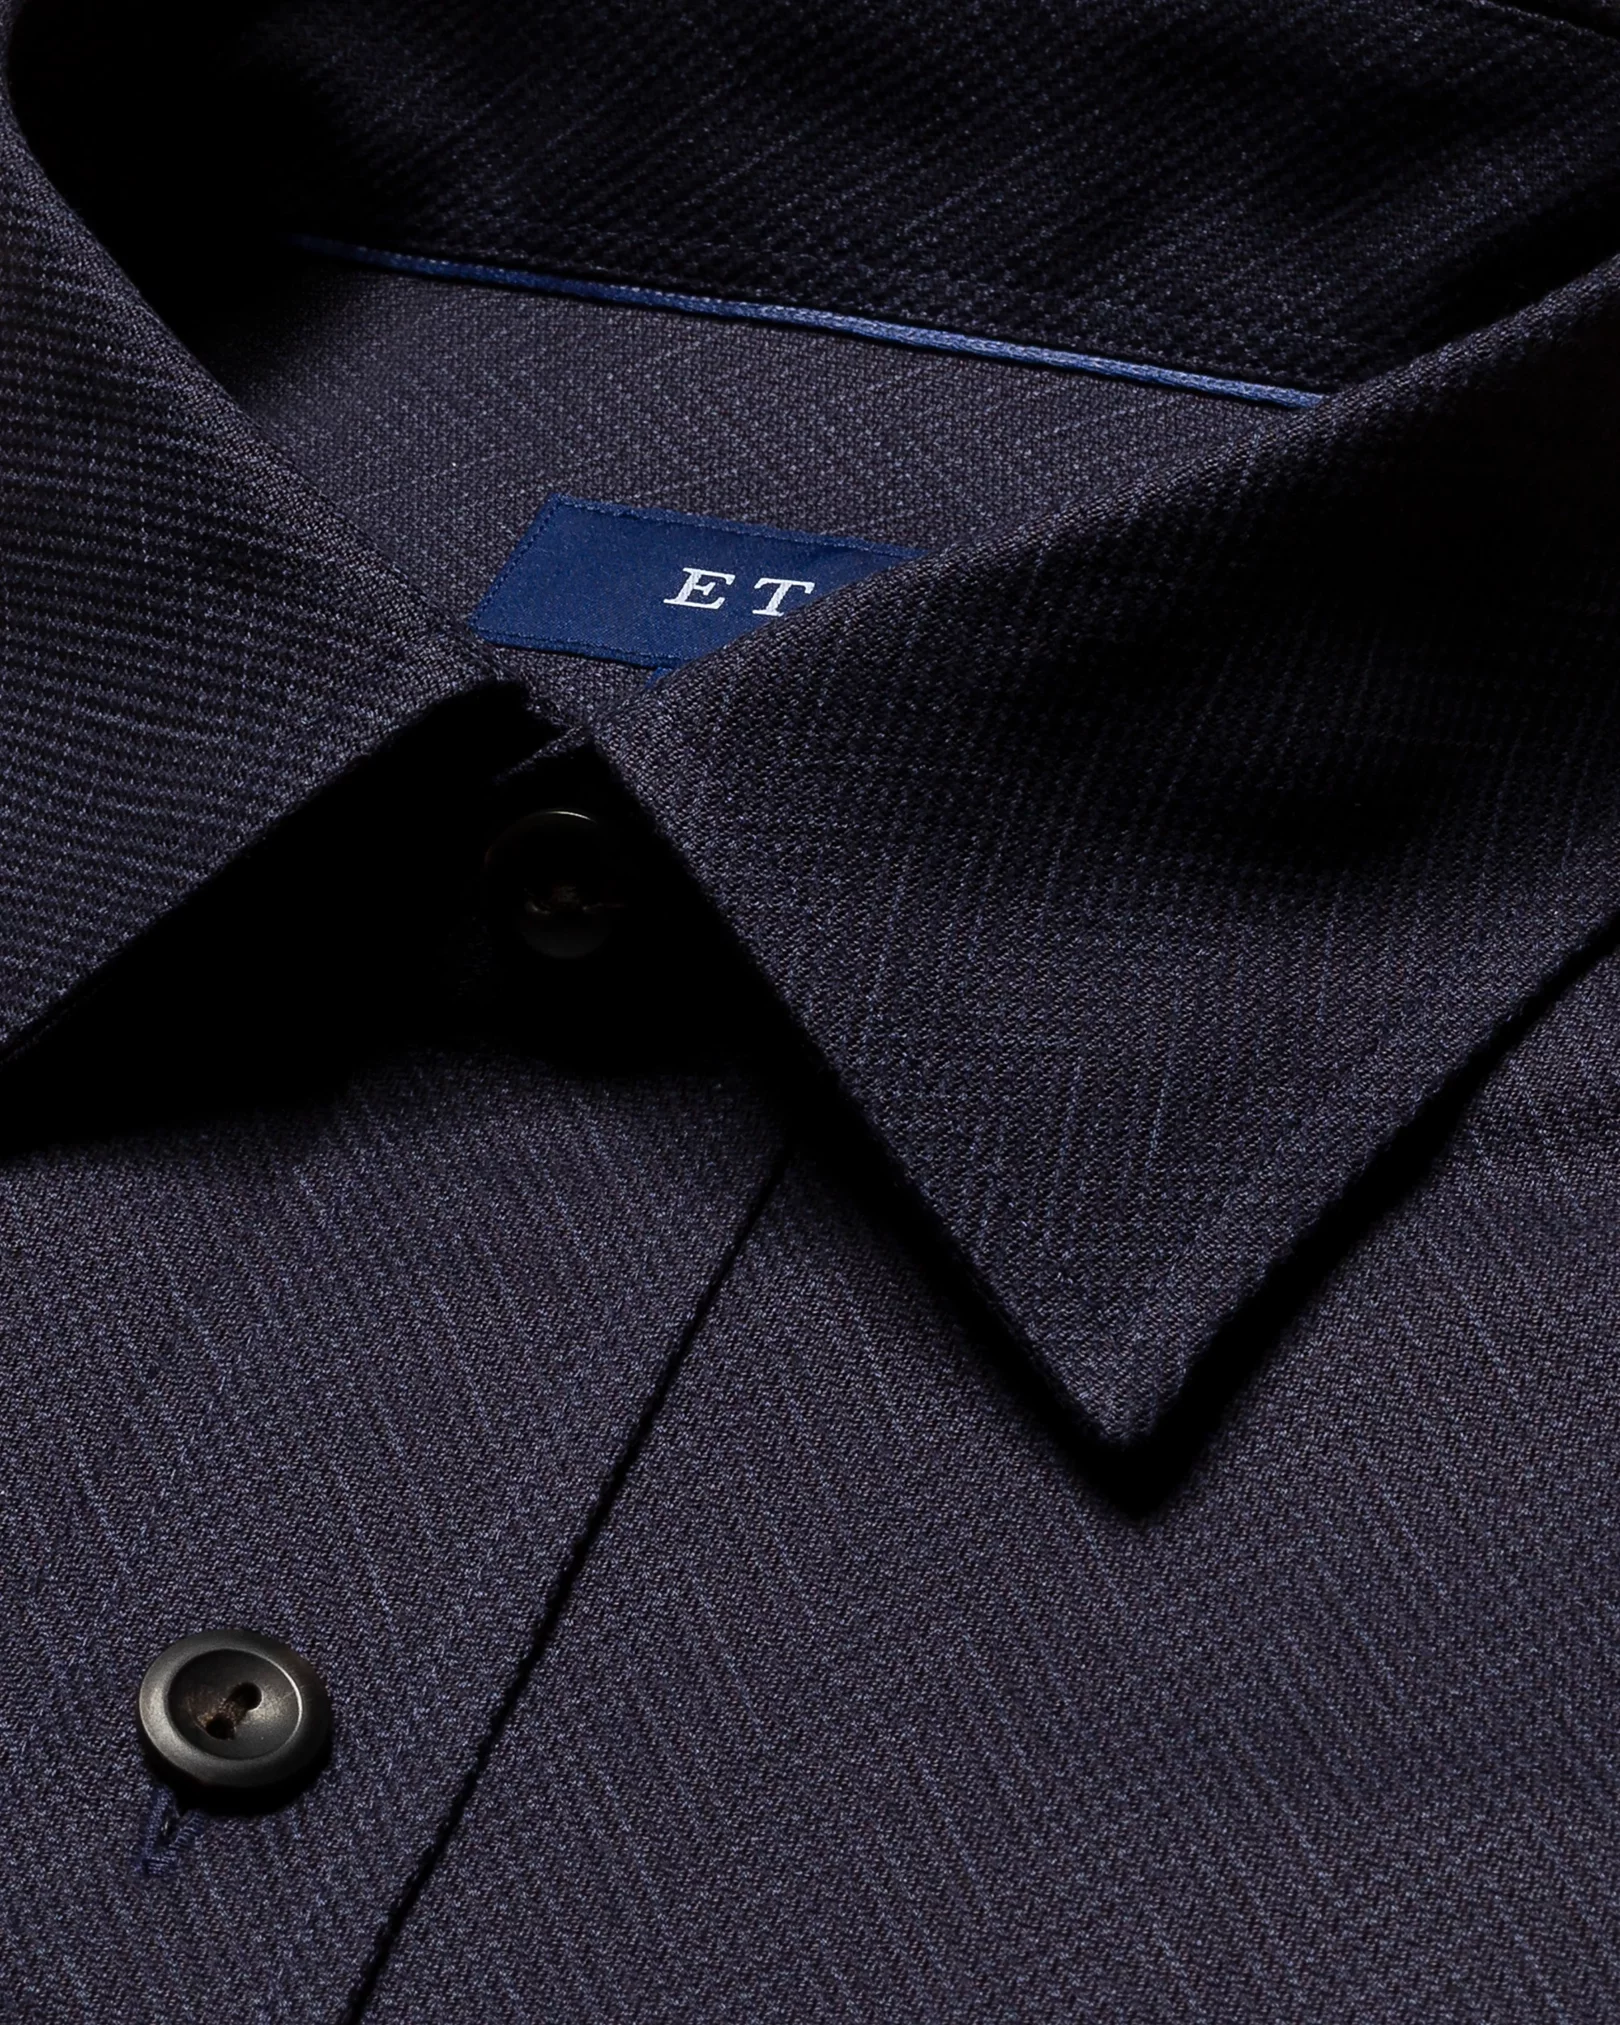 Eton - navy blue dobby overshirt